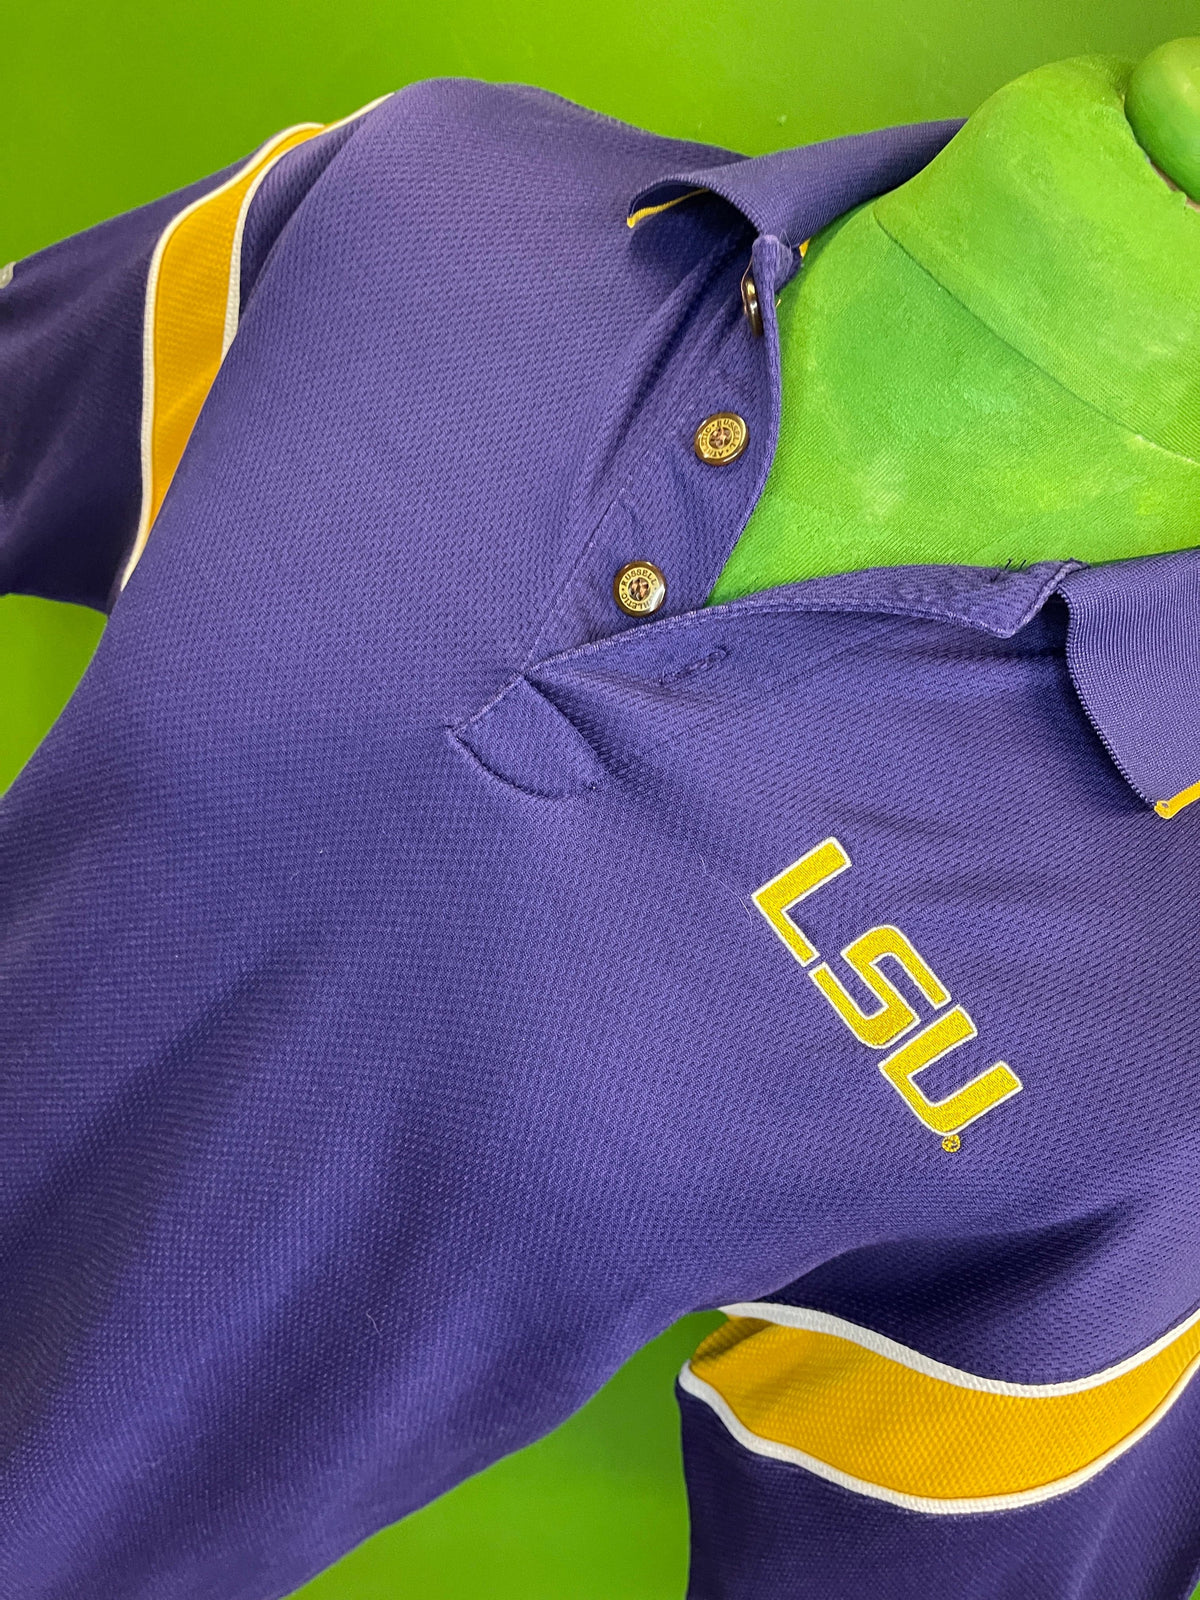 NCAA Louisiana State LSU Tigers Russell Textured Golf Polo Shirt Men's Medium